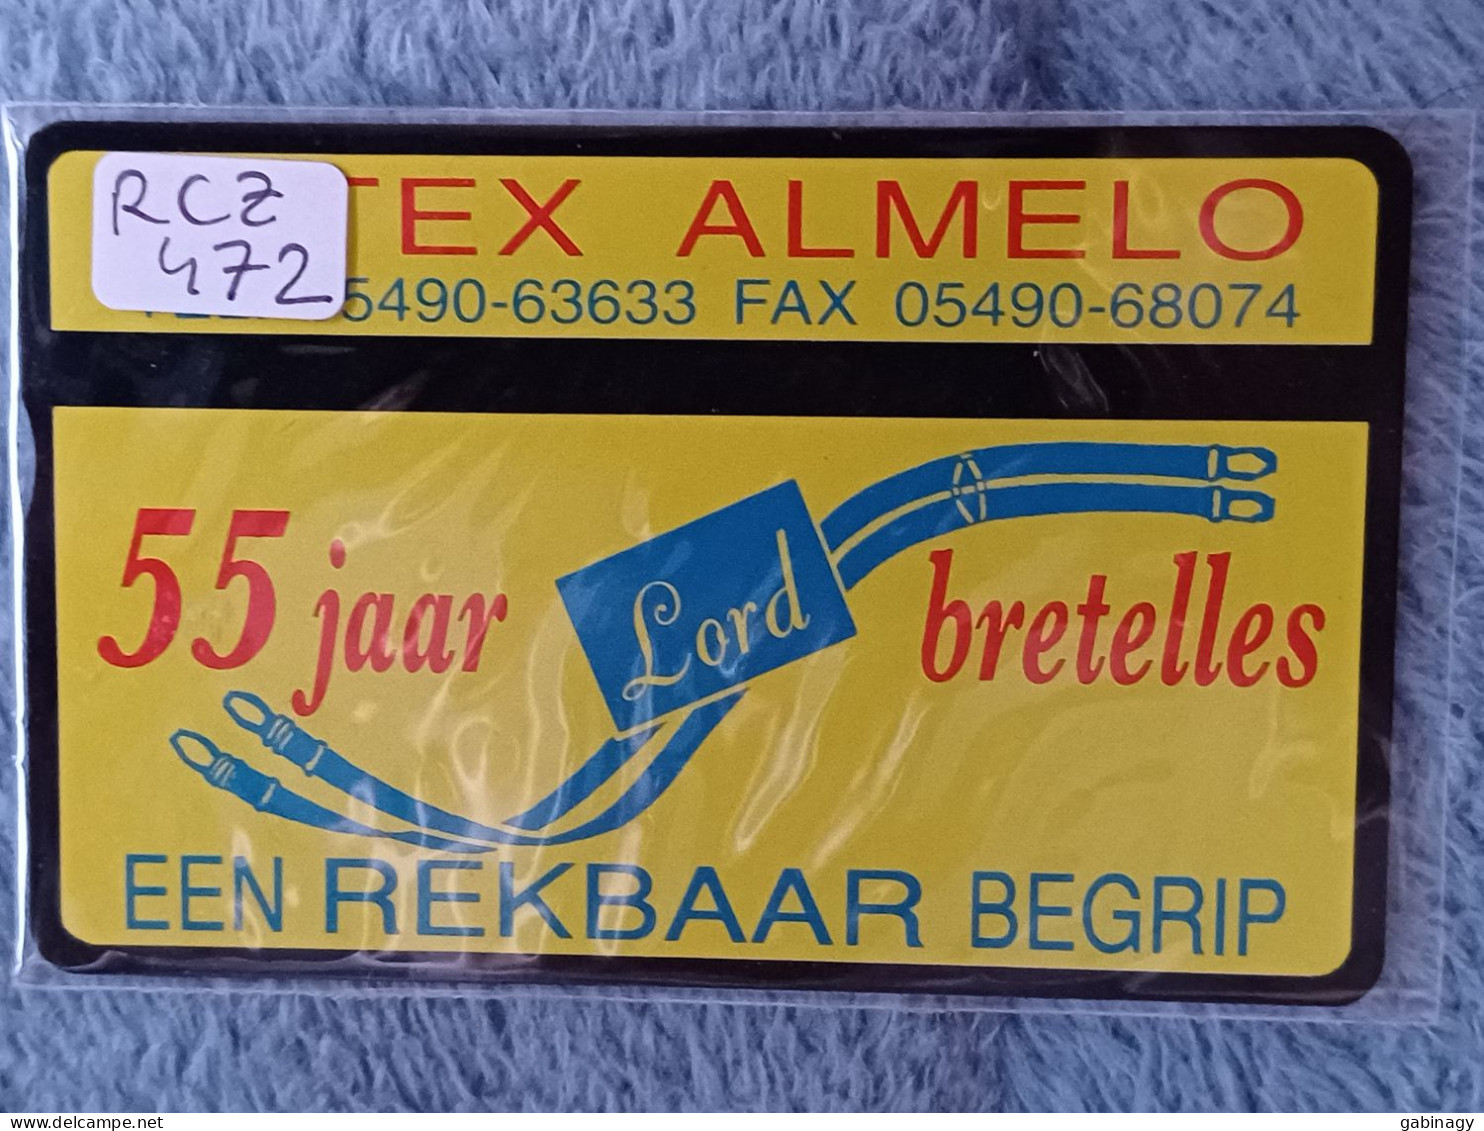 NETHERLANDS - RCZ472 - Eltex Almelo 55 Jaar Lord Bretelles - 1.030EX. - Privé